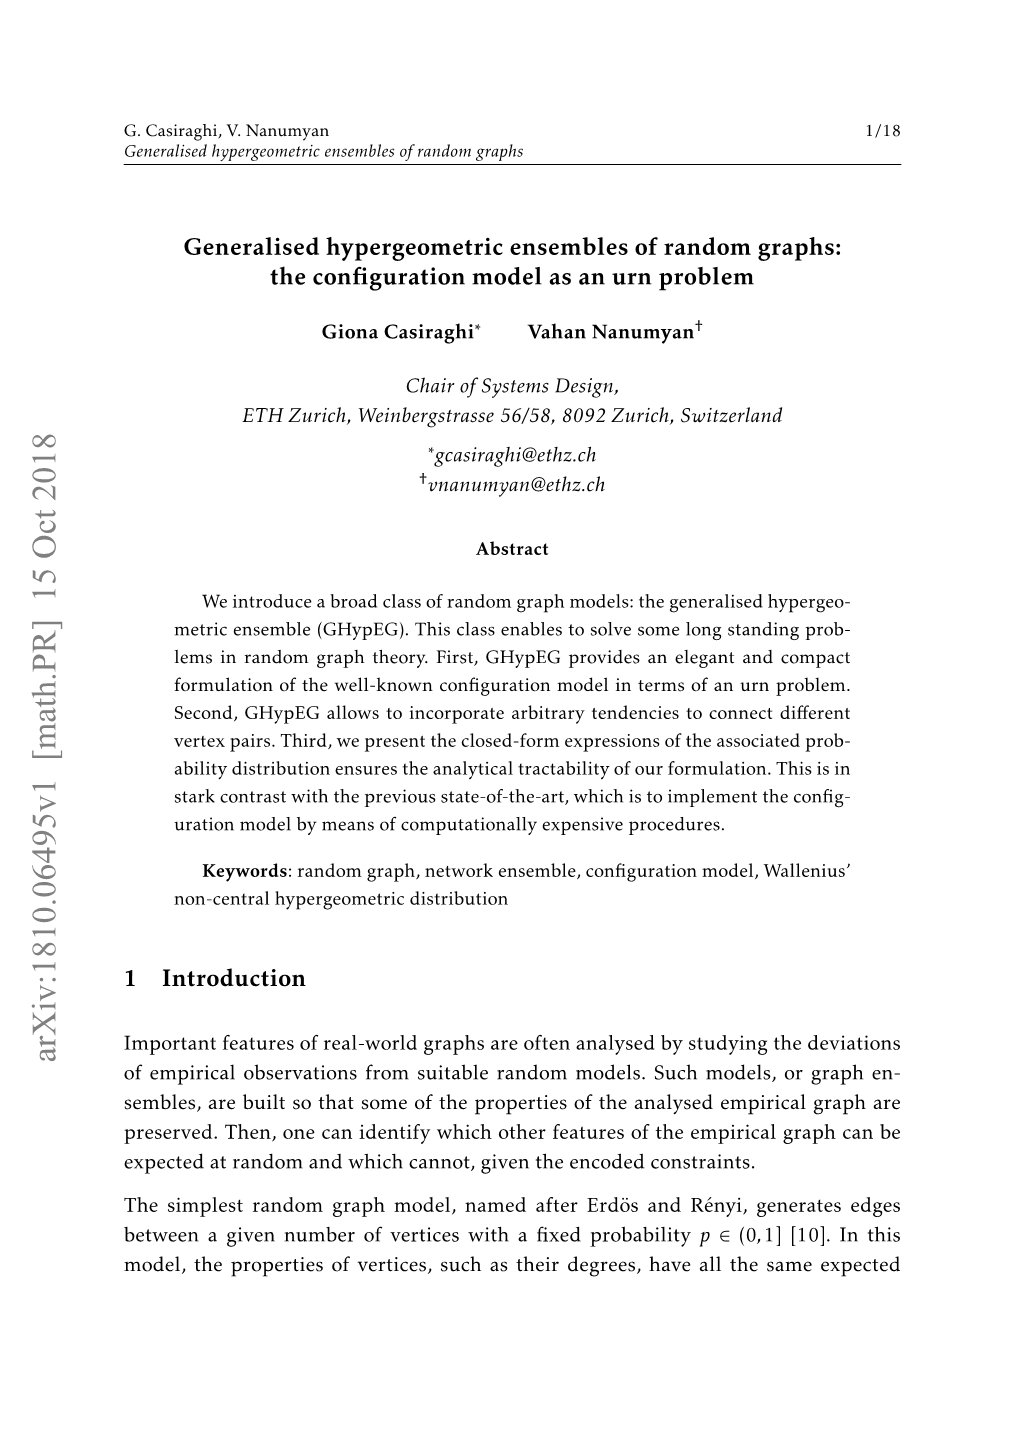 Generalised Hypergeometric Ensembles of Random Graphs: the Conﬁguration Model As an Urn Problem